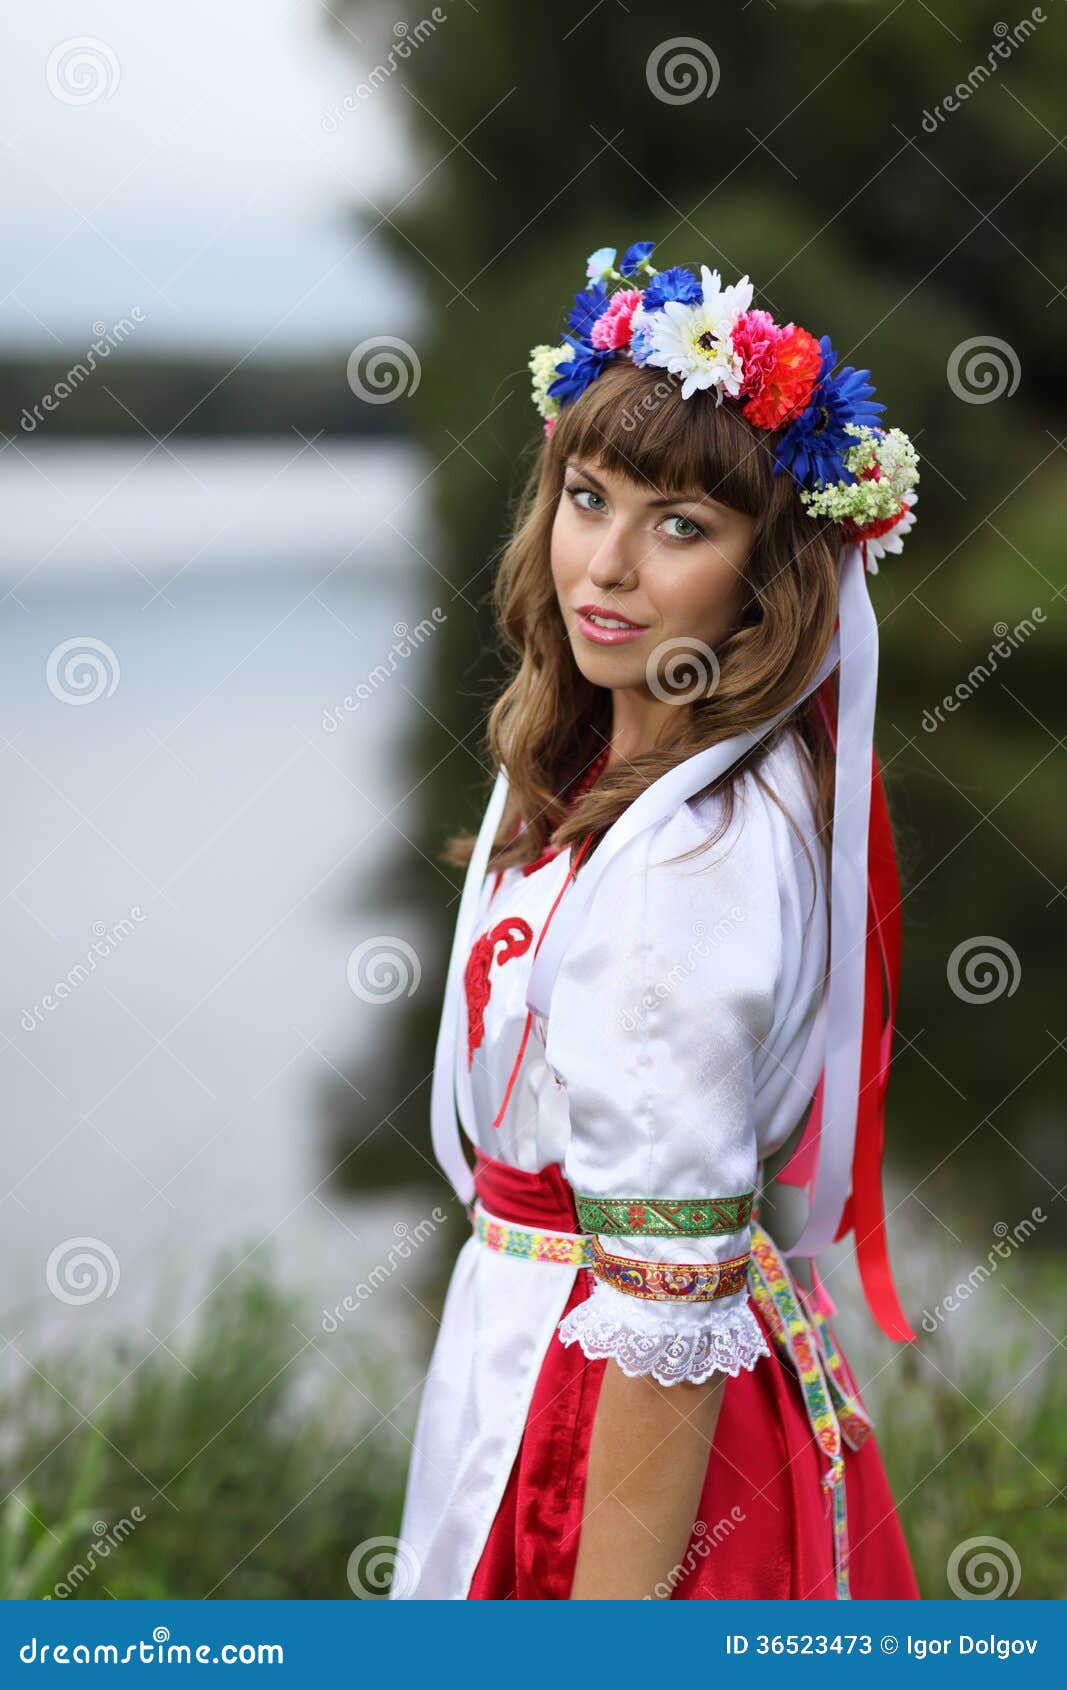 Ukrainian Girl on the Banks of the River Stock Image - Image of bank ...